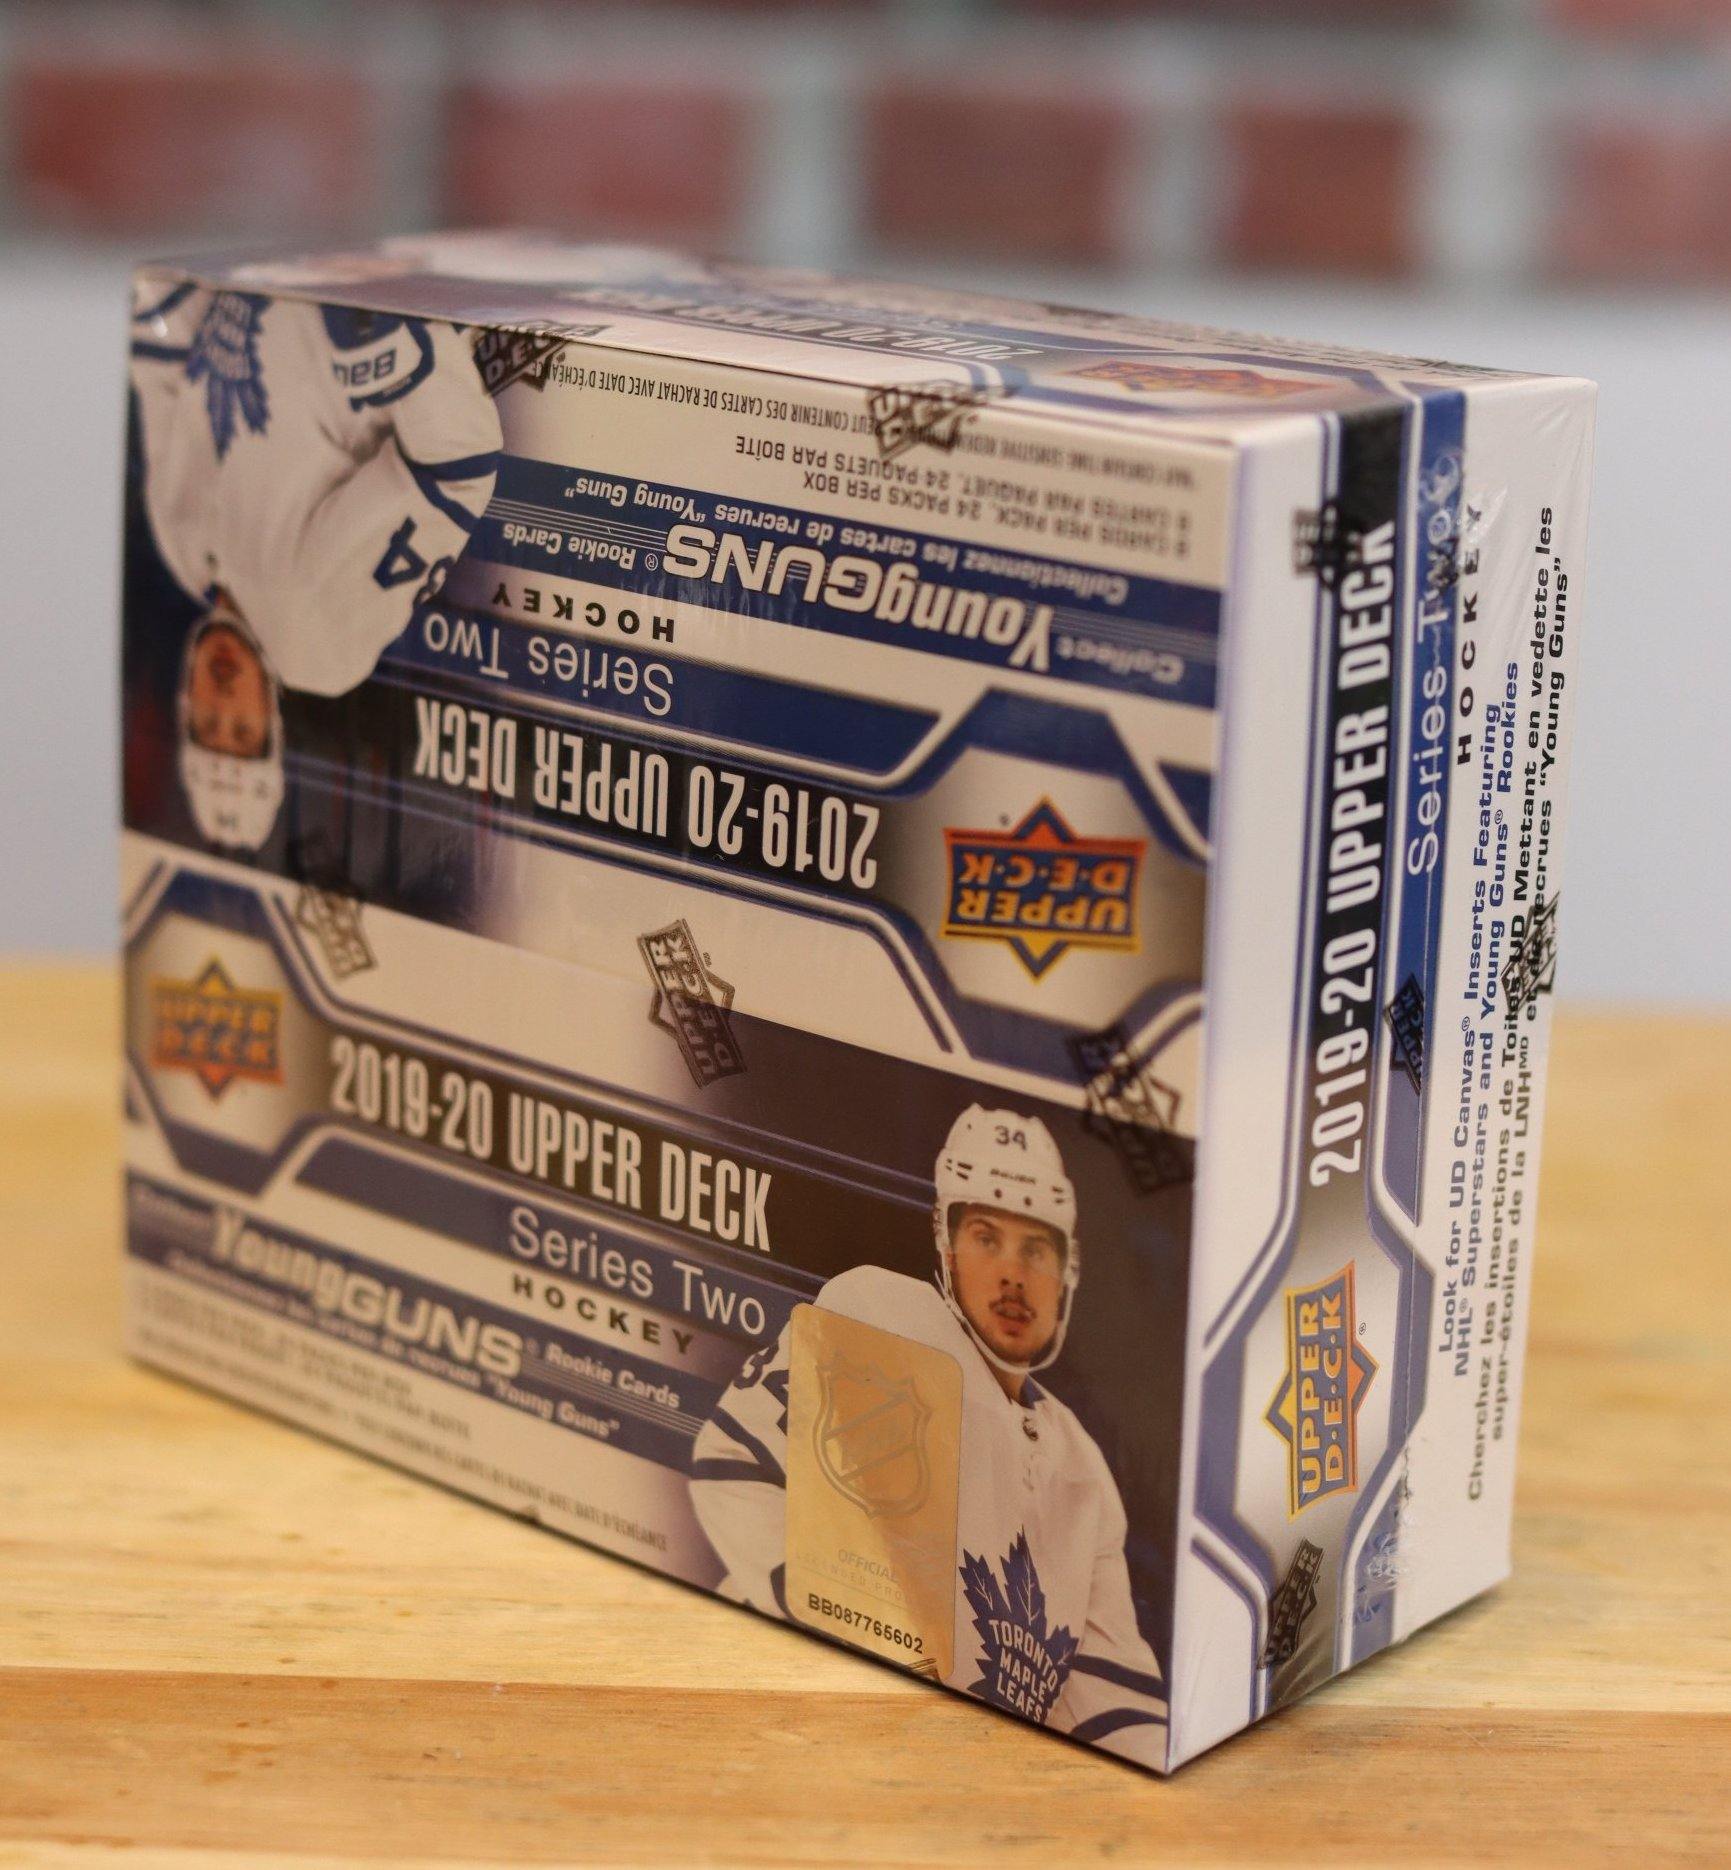 2019/20 Upper Deck Hockey Card Series 2 Retail Wax Box (24 Packs) - FLIP Collectibles Shop